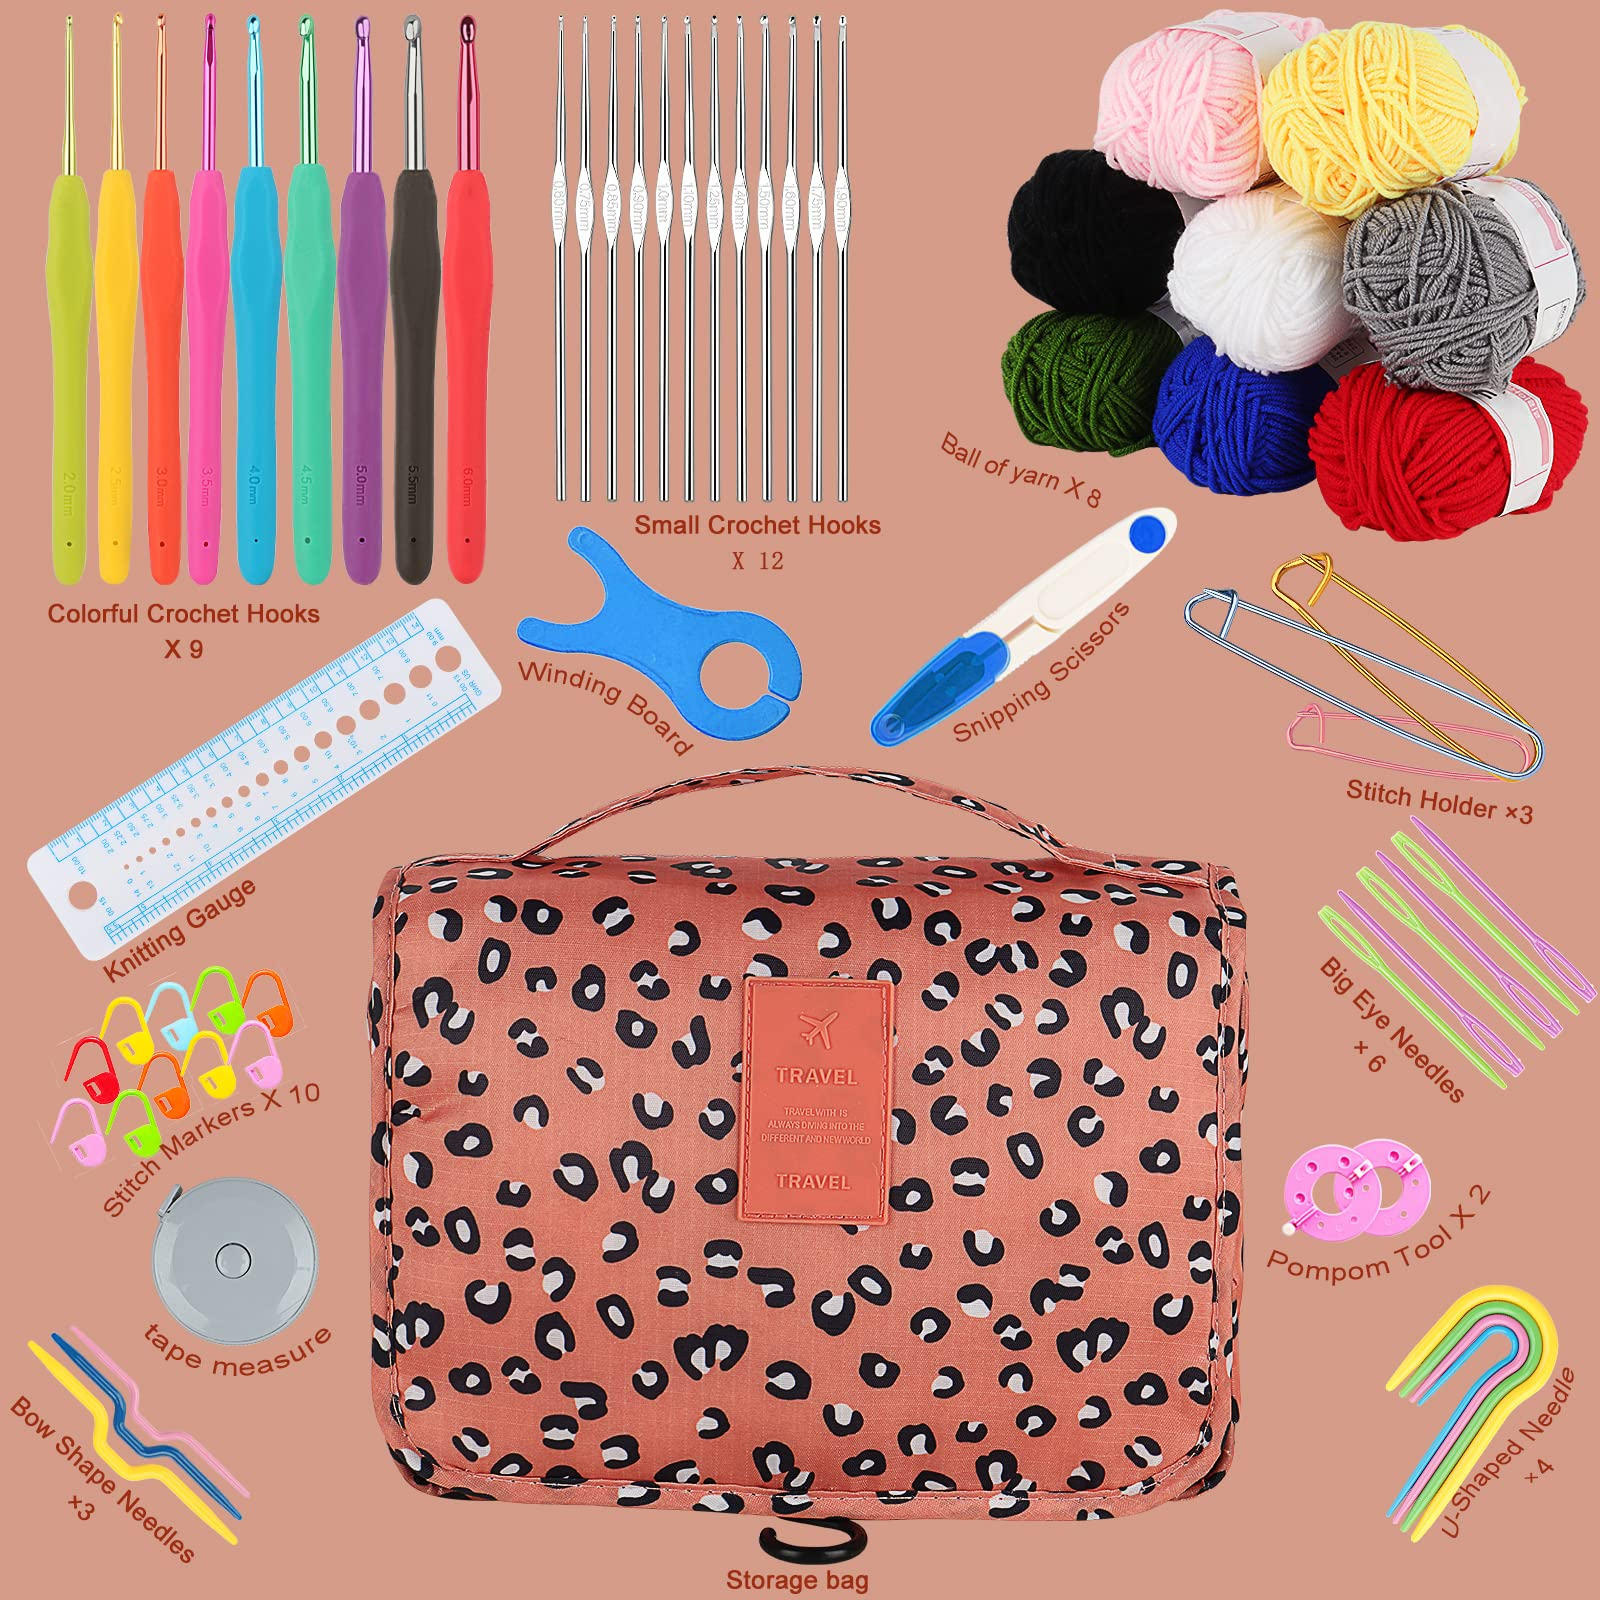  Allnice 127Pcs Crochet Kits with Yarn Set for Beginners Adults  Kids, Crochet Hook Sets 0.6-6.5mm Crochet Needles Yarn Knitting Tool  Accessories with Carry Bag, Beginner Crochet Starter Kit Knitt Gifts